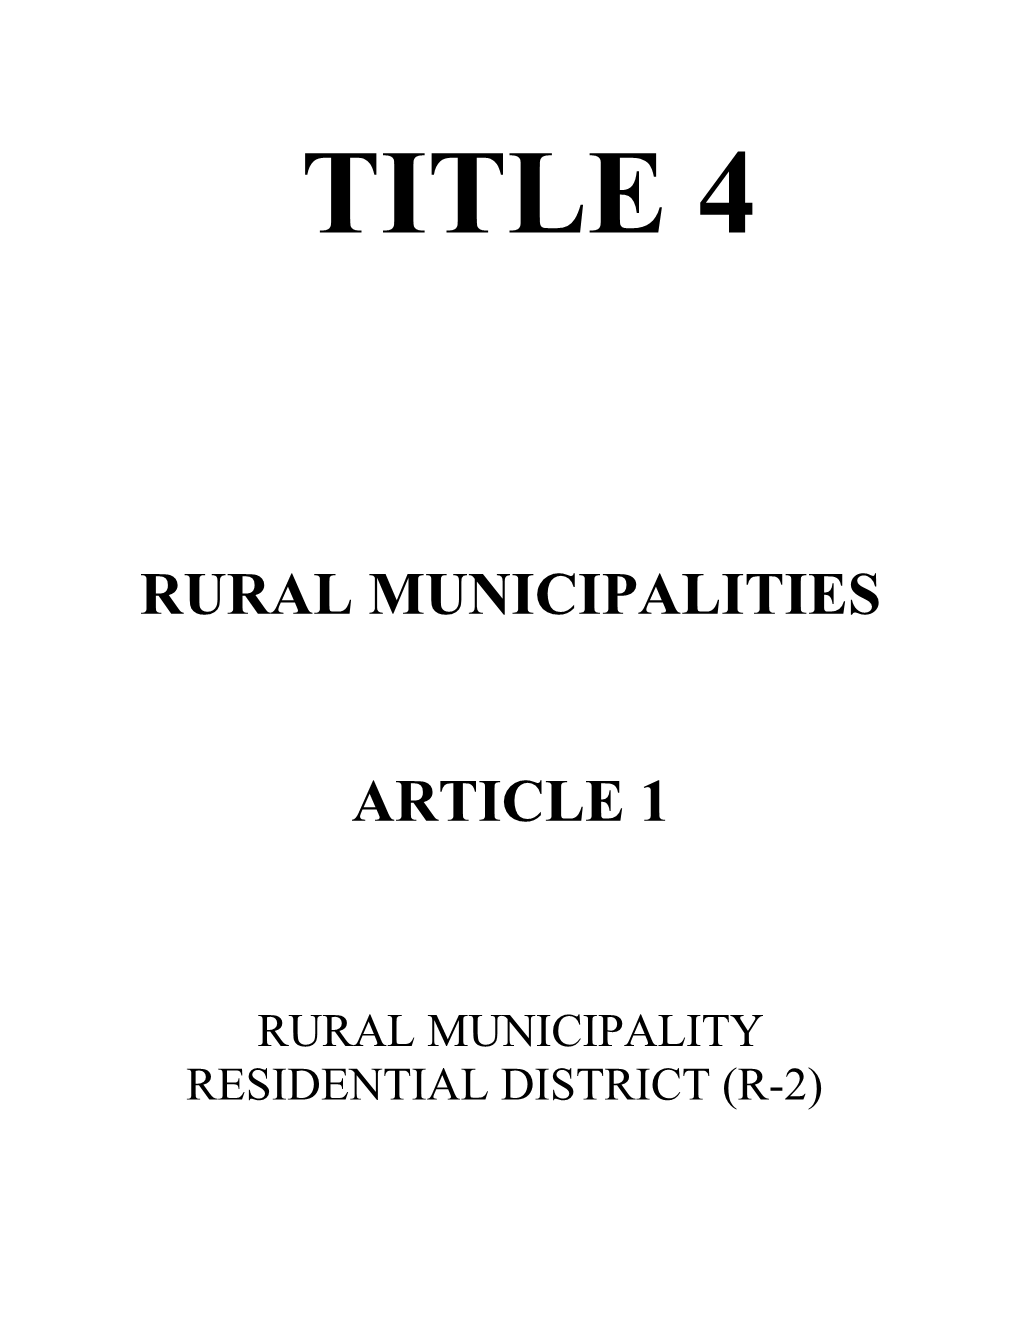 Rural Municipalities